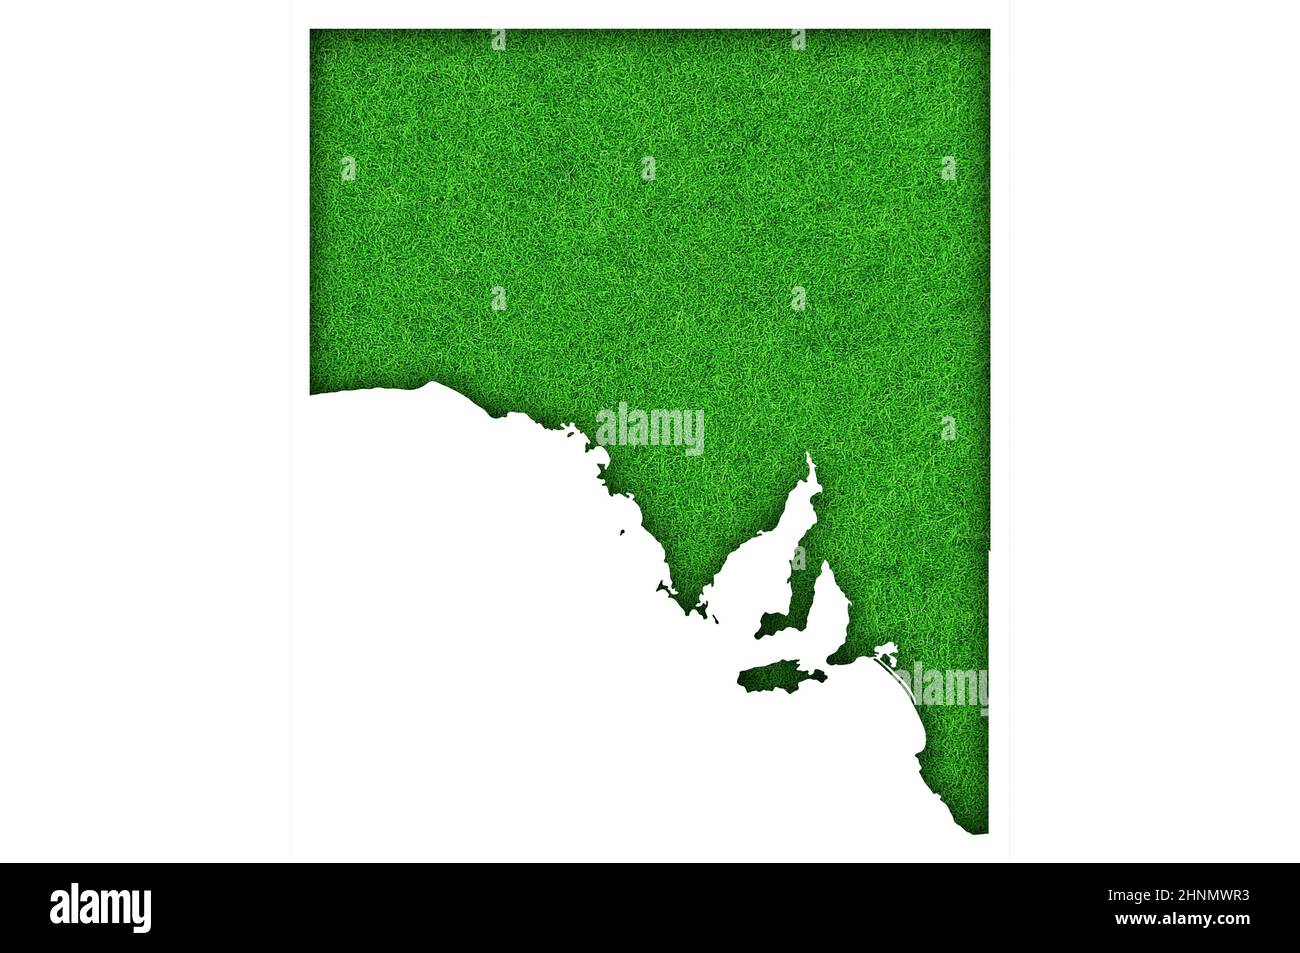 Map of South Australia on green felt Stock Photo